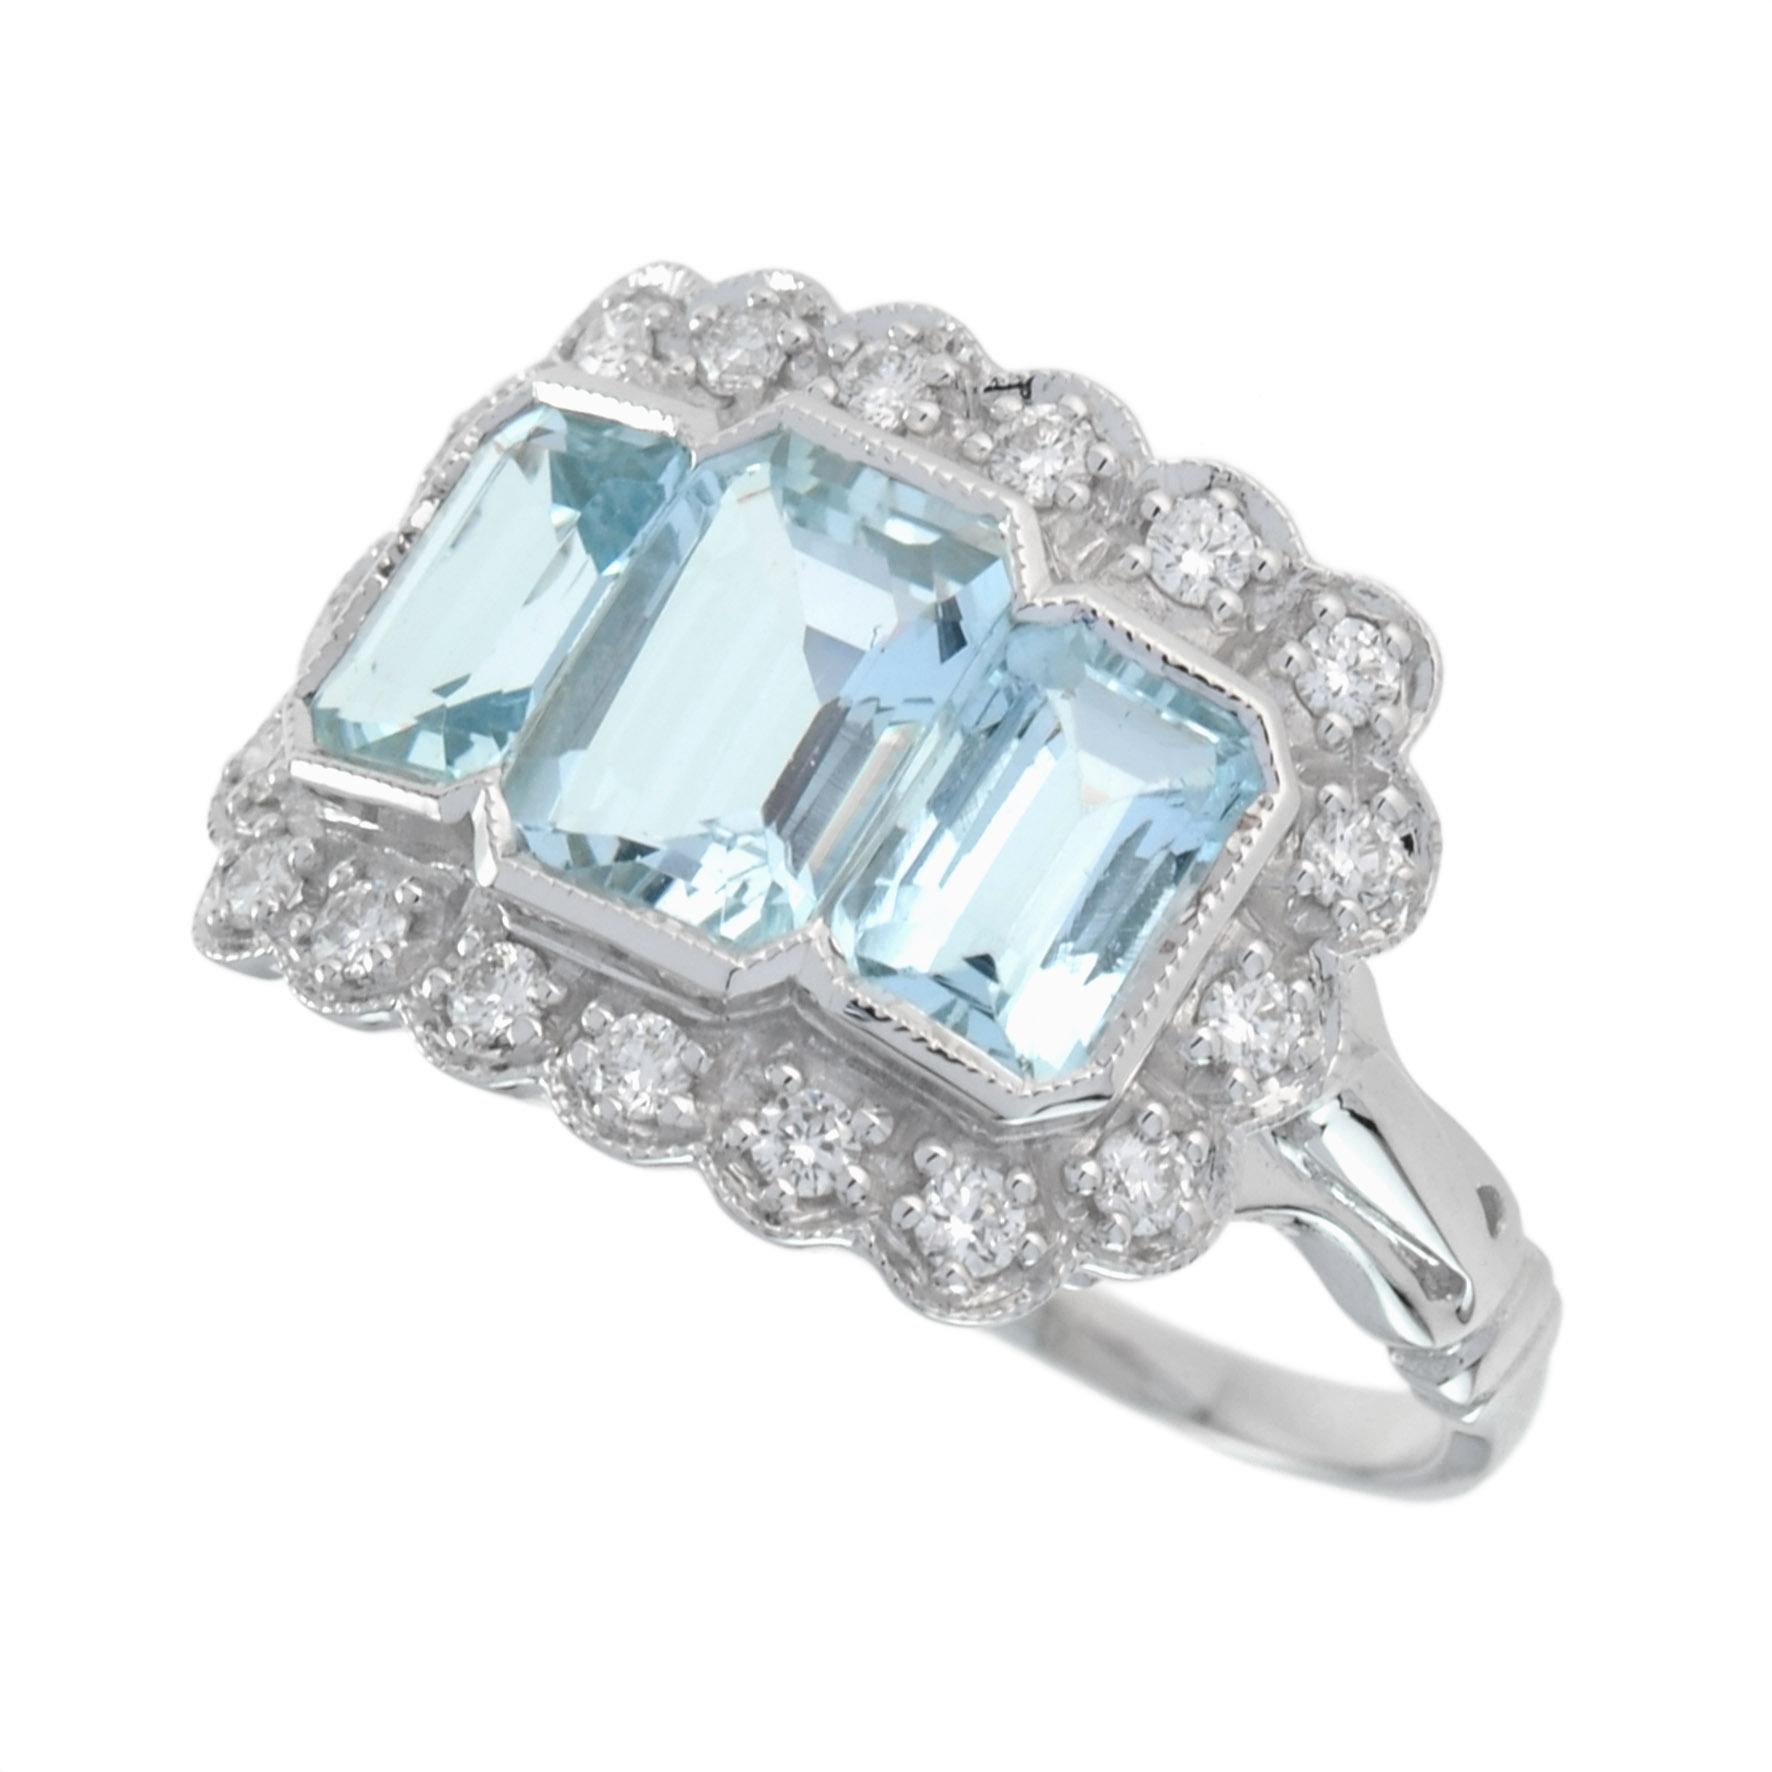 14K White Gold Over 7.58Ct Emerald Cut Aquamarine Diamond Wedding Ring 